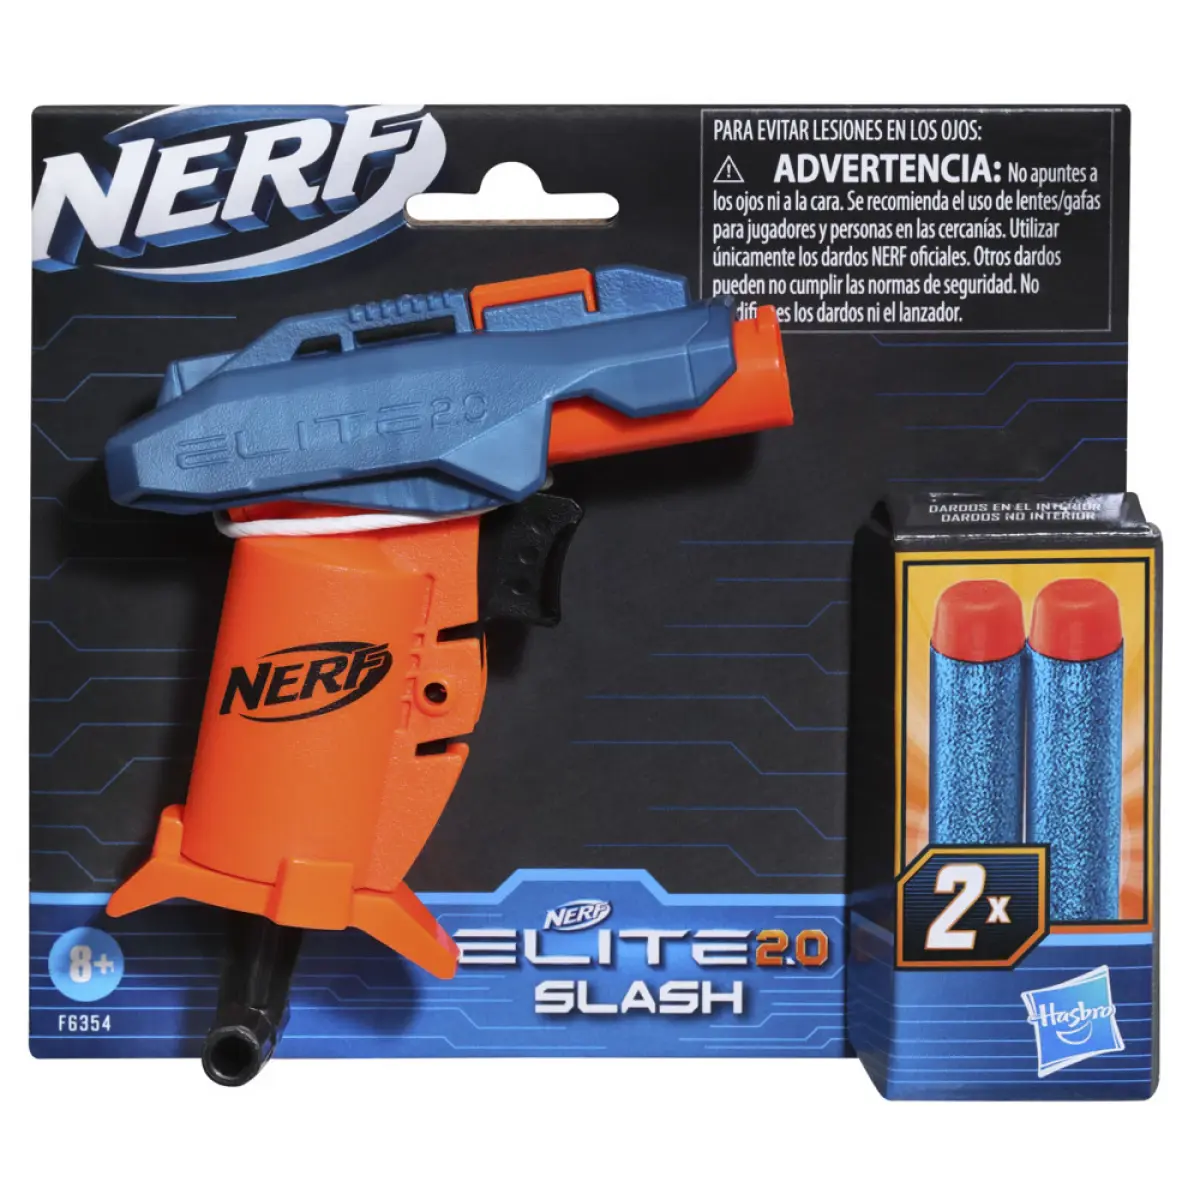 Nerf Elite 2.0 Slash Blaster, Includes 2 Nerf Elite Darts, Pull To Prime Handle, Toy Foam Blaster For Outdoor Kids Games